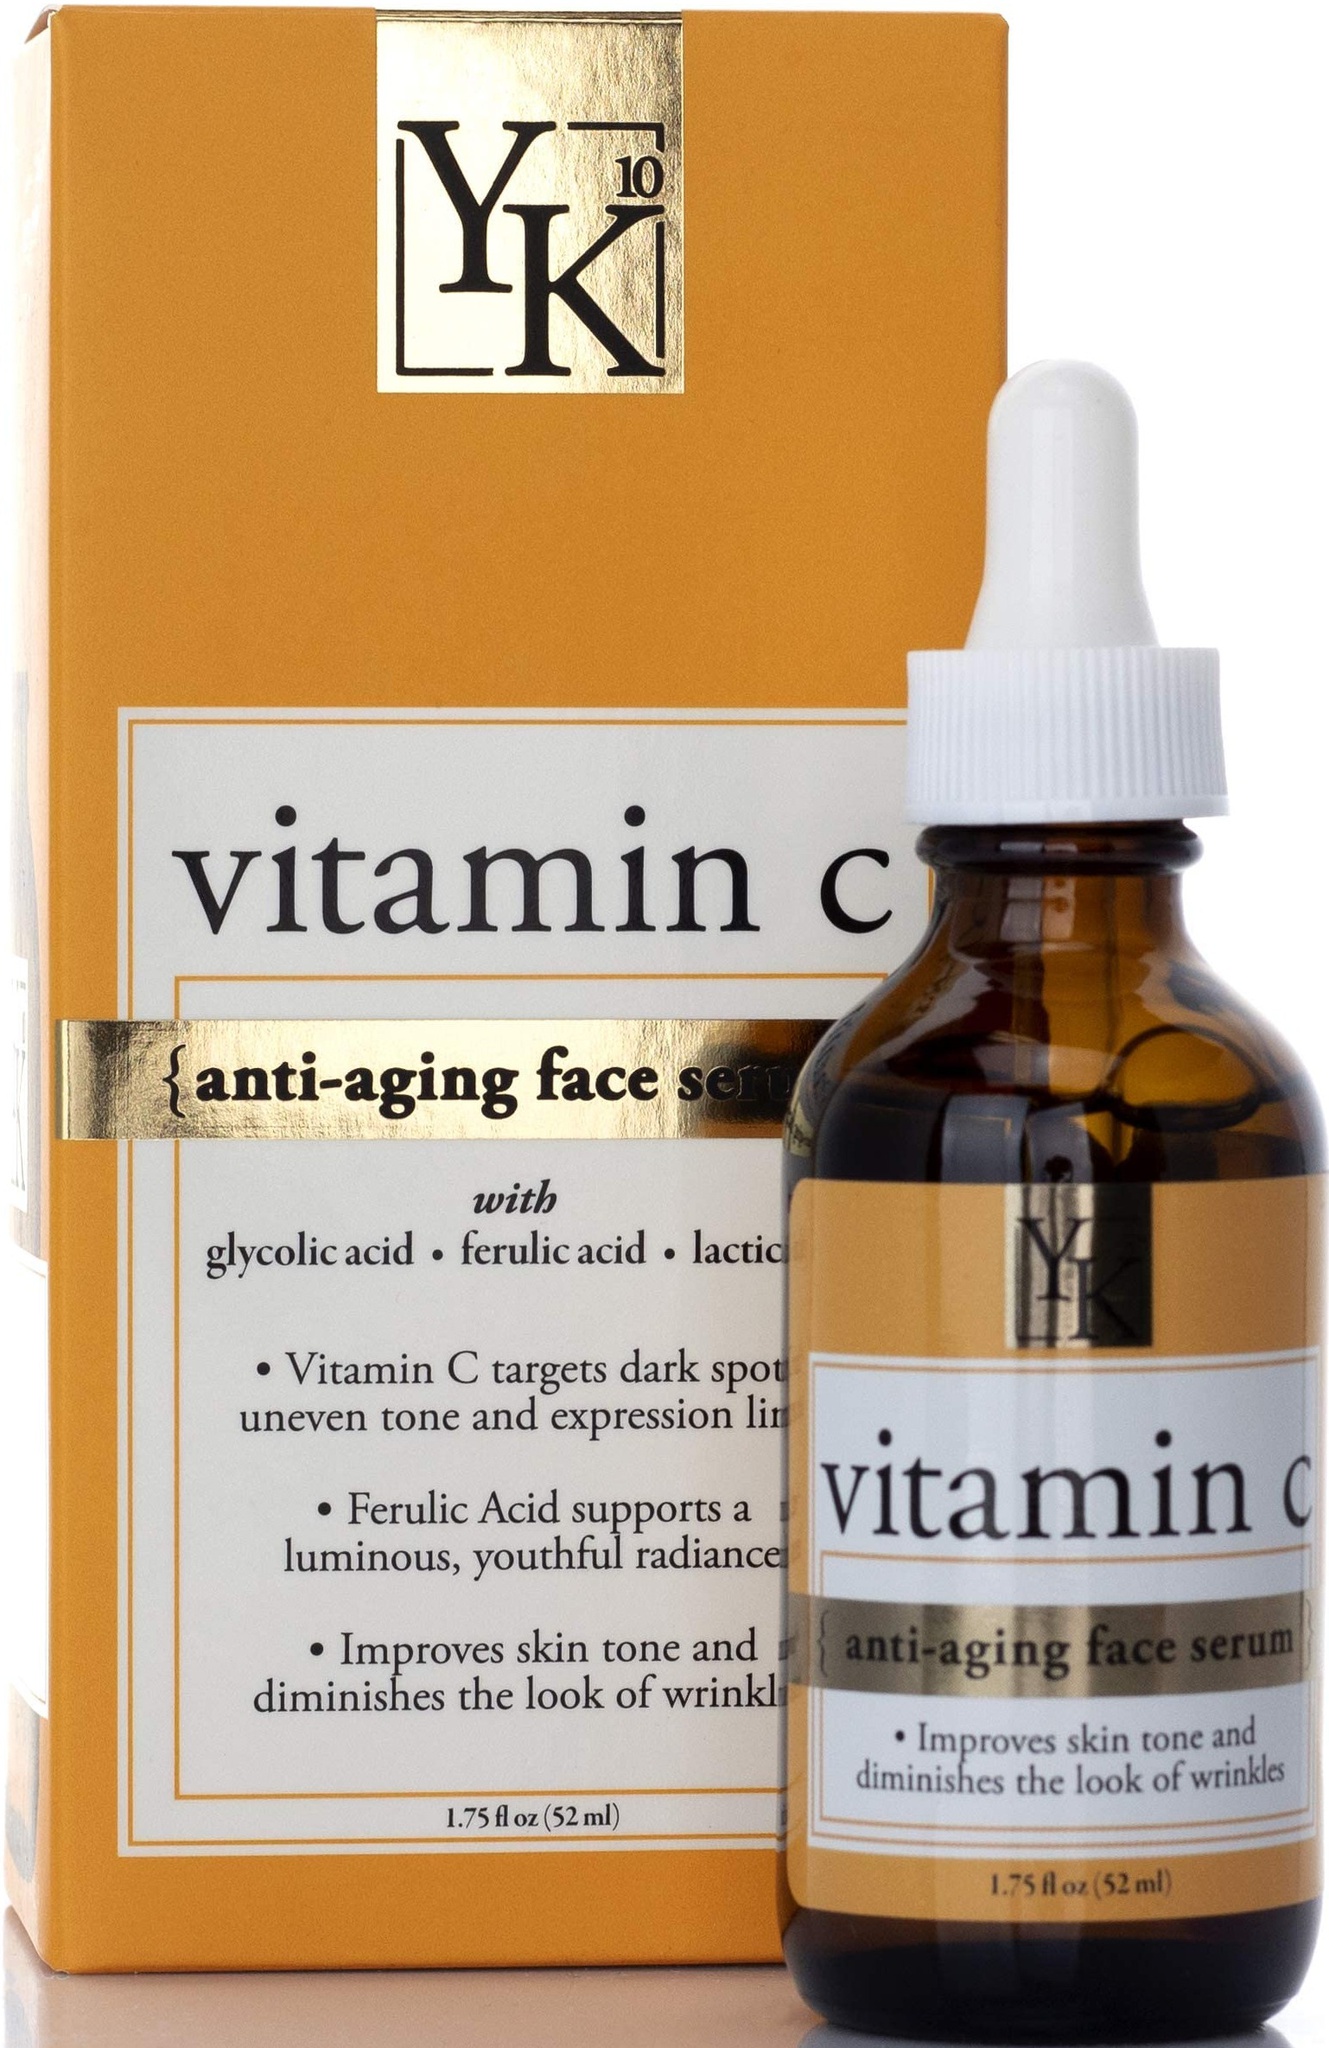 Yk 10 Vitamin C